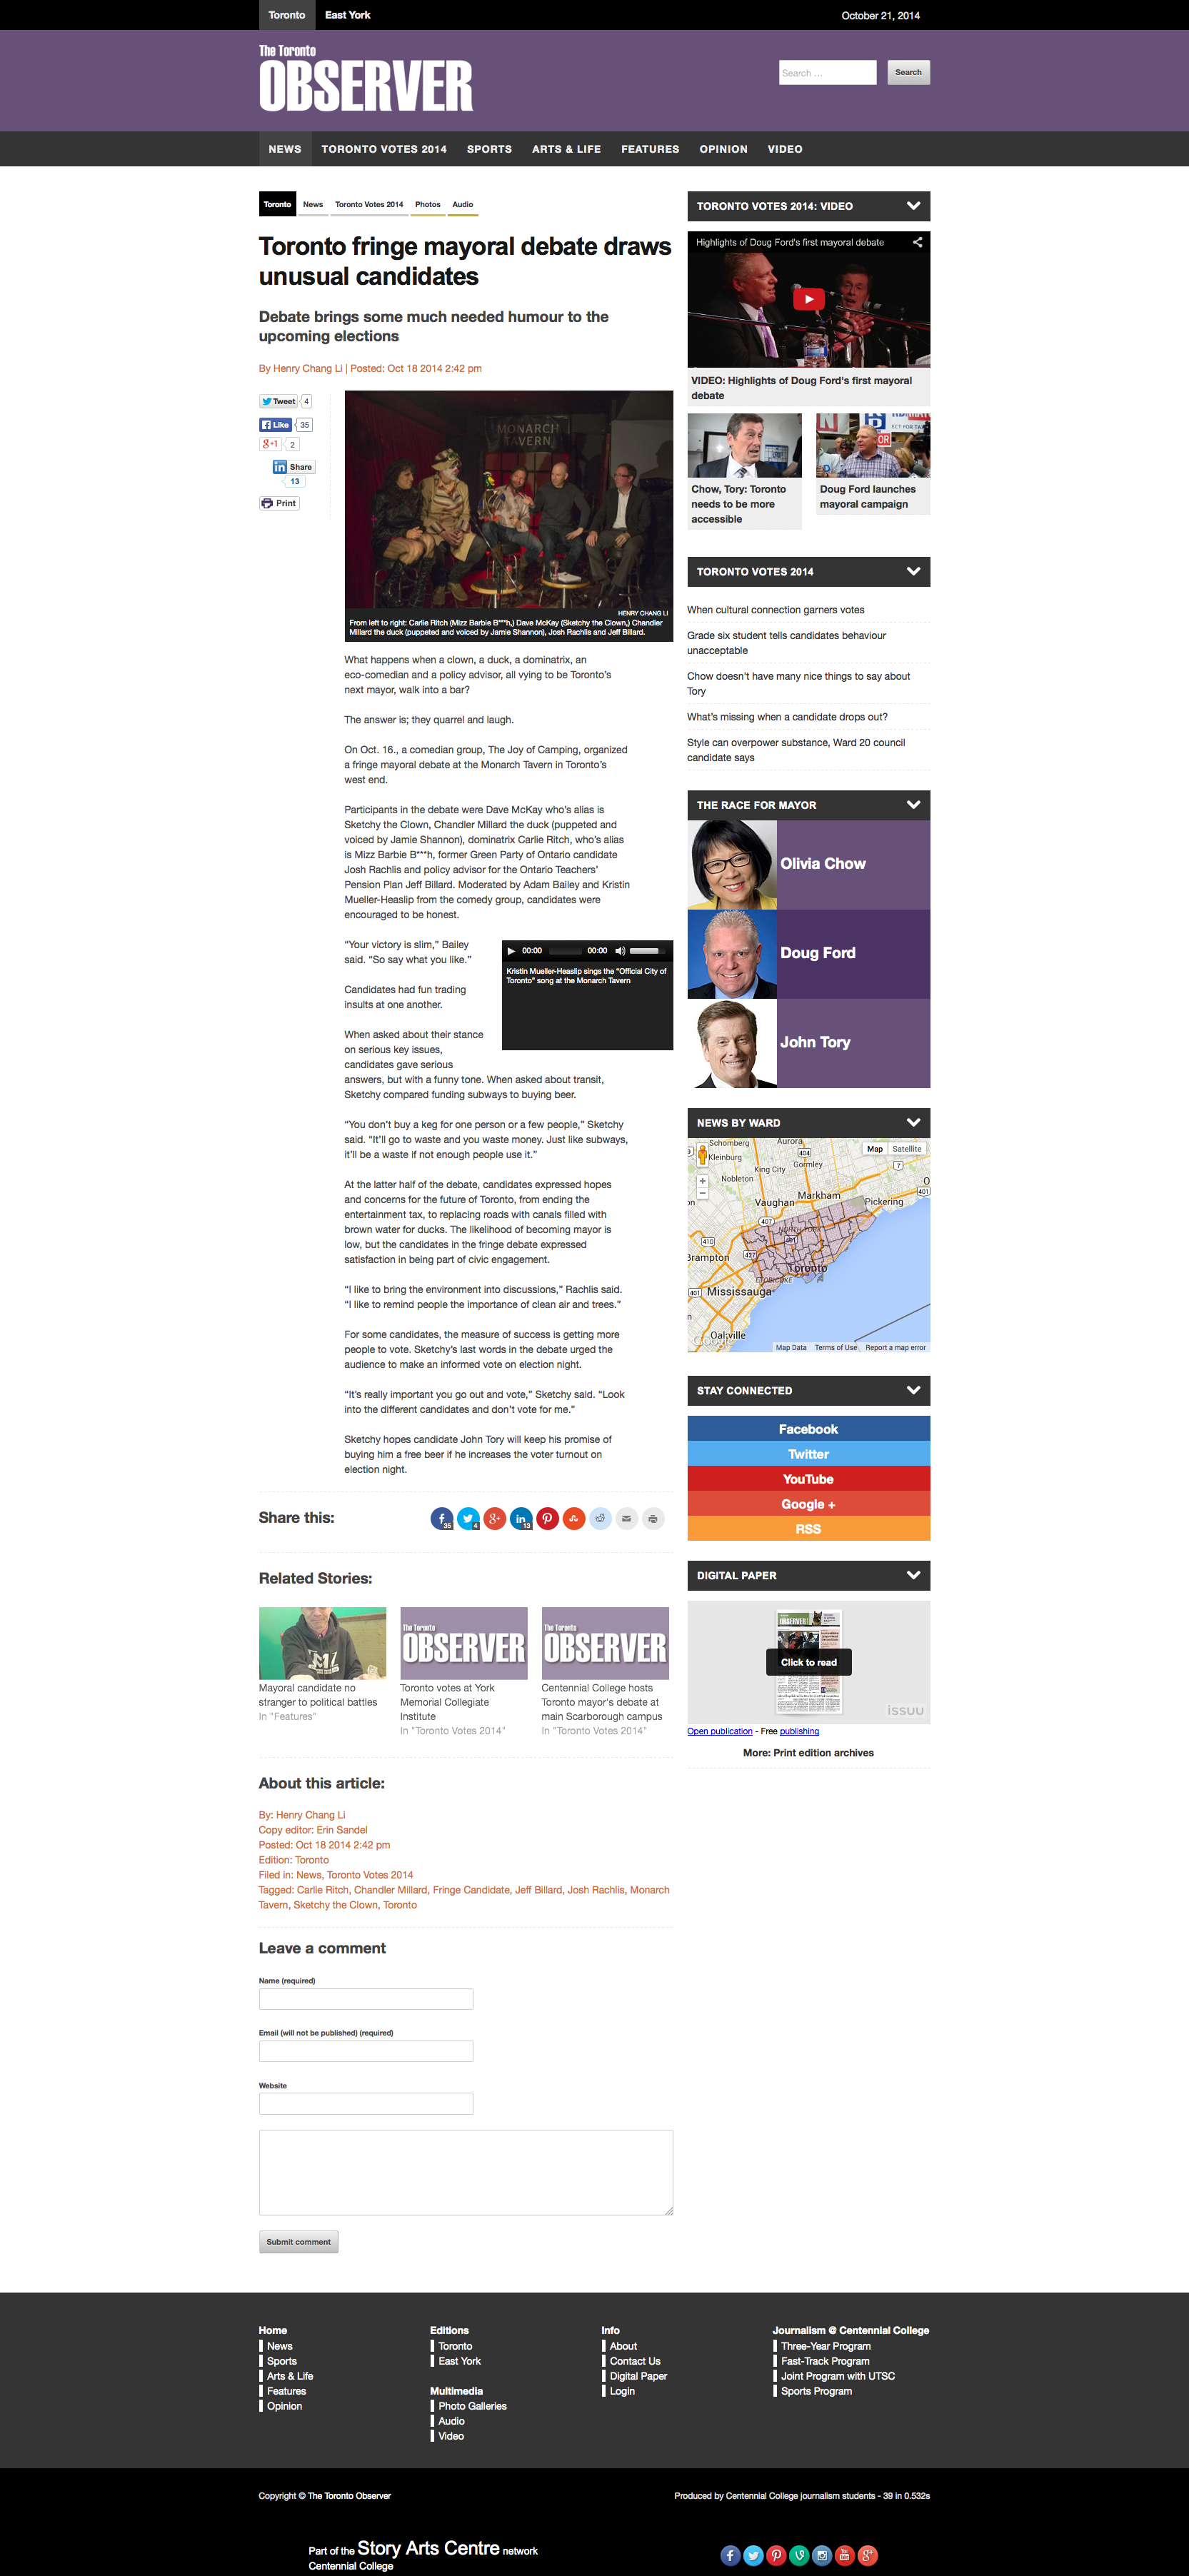 Article about fringe candidates Mayoral debate - Toronto Observer - Oct. 18, 2014